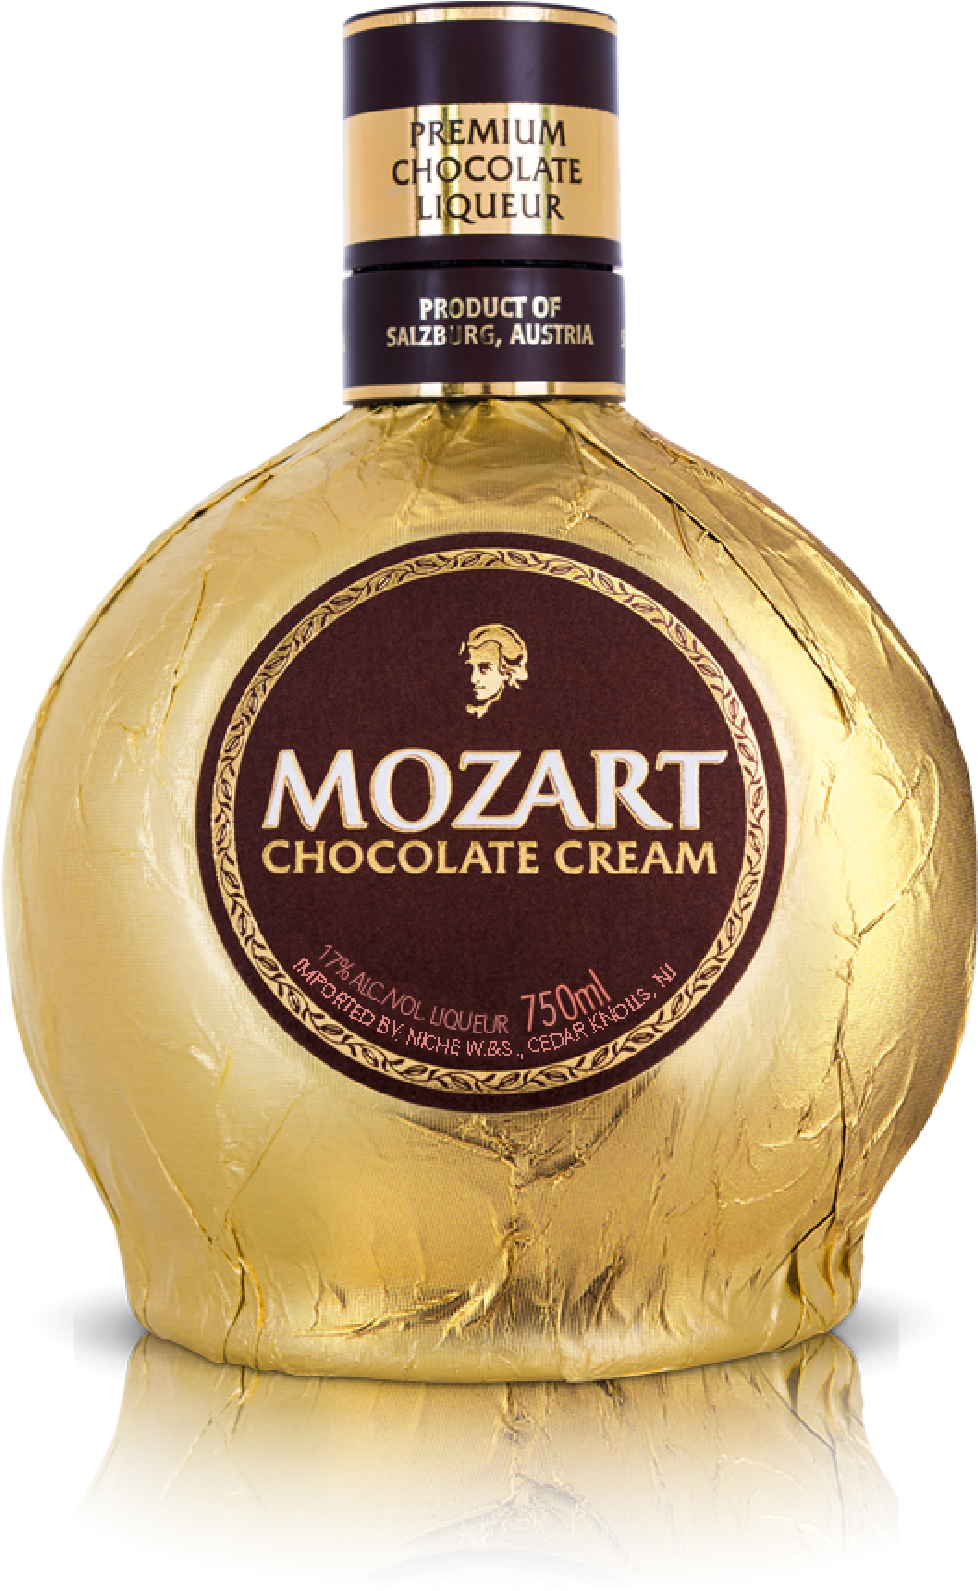 Mozart Bottle Reflection Mesh-01 - Mozart Chocolate Cream Liqueur, Hd Png Download